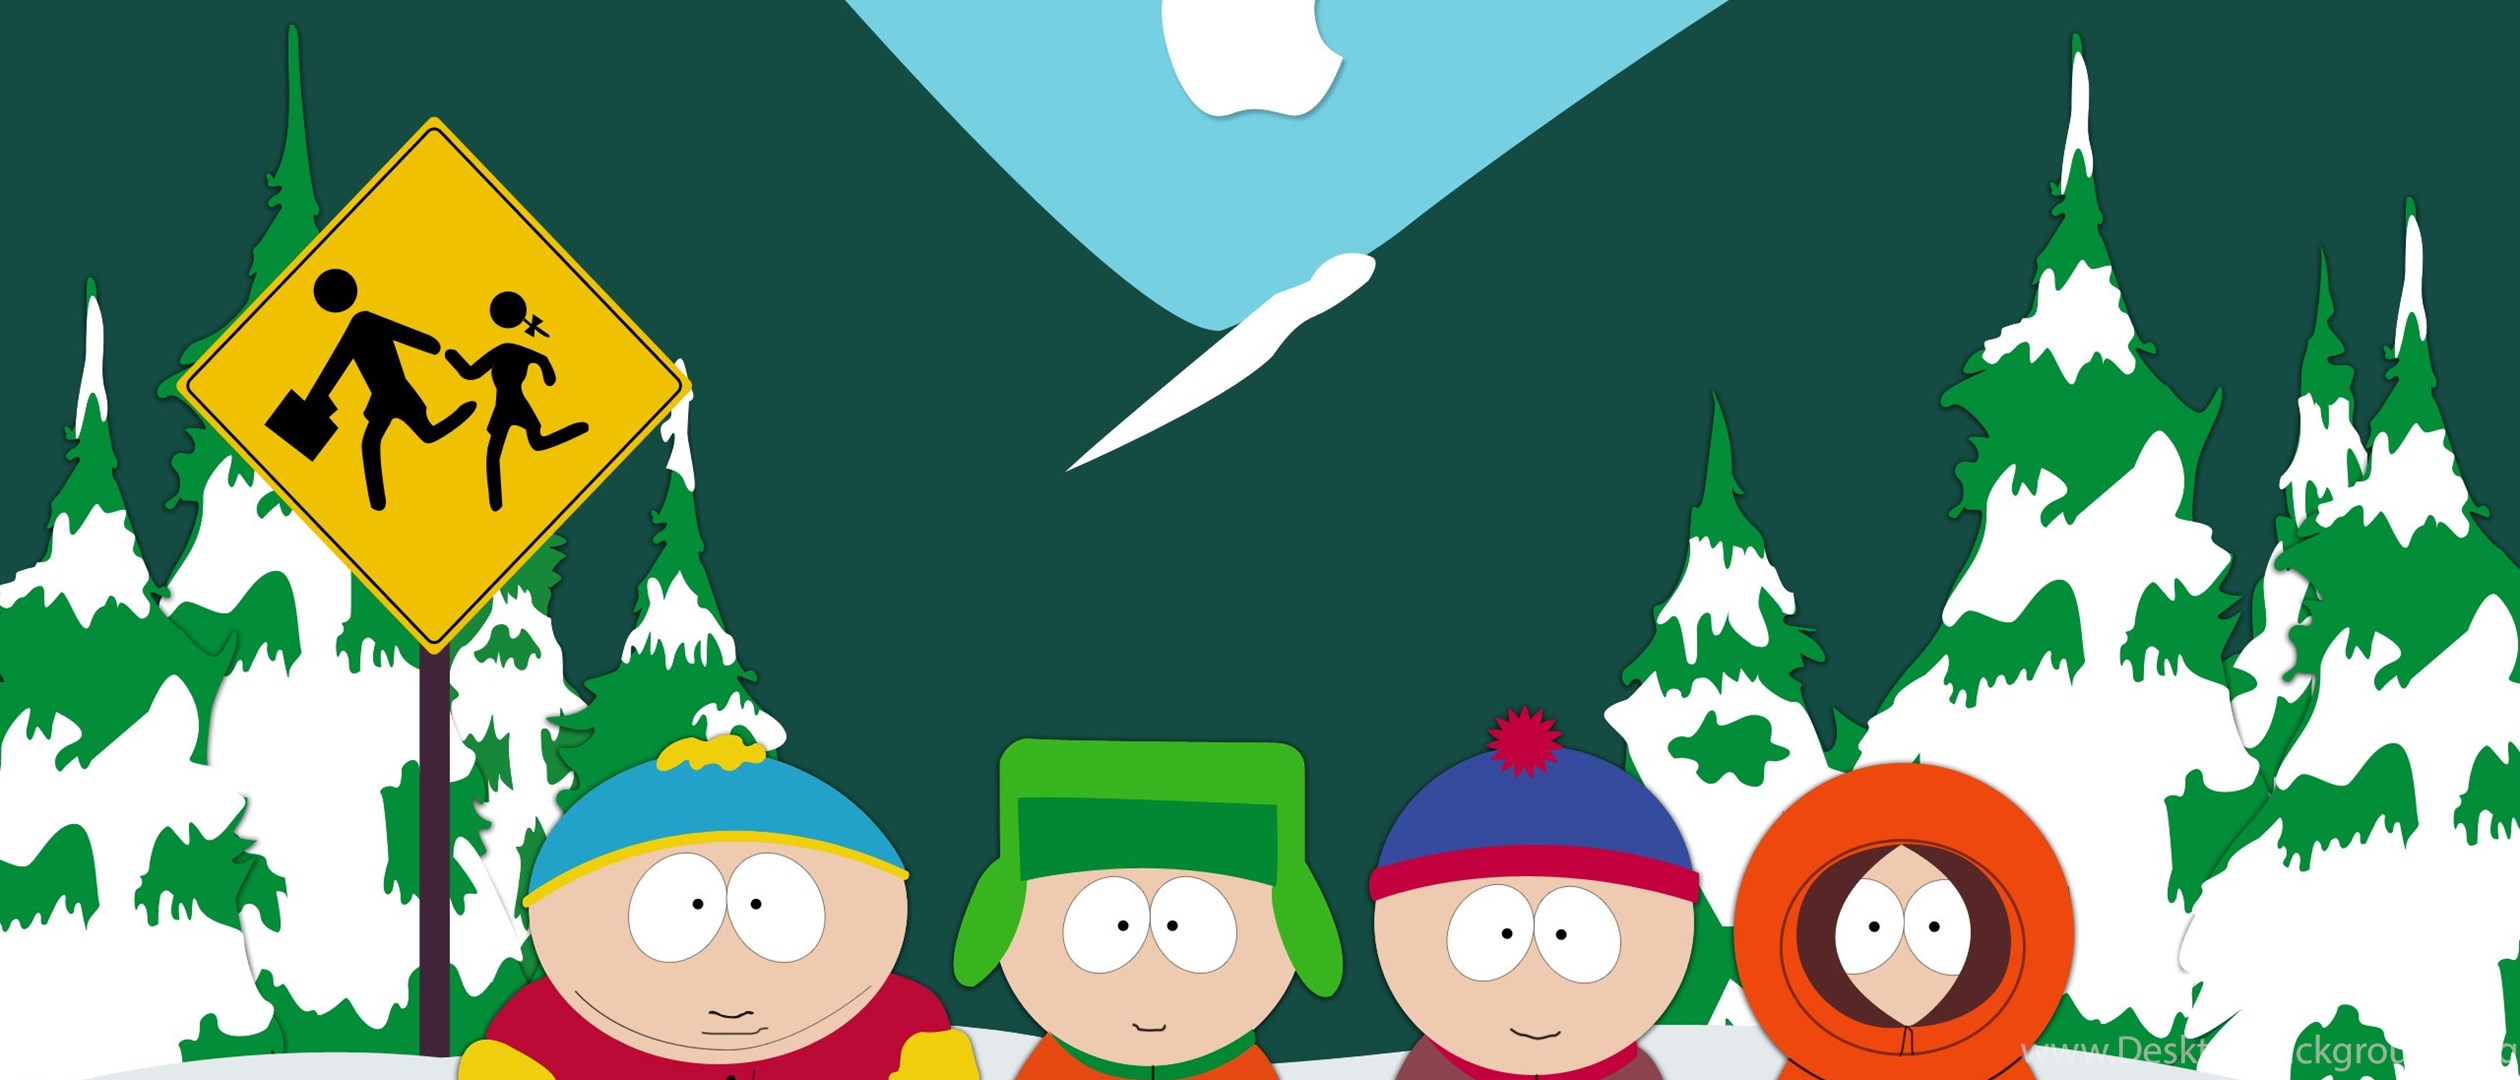 Download South Park HD Wallpapers For Desktop Download Widescreen Wide 21:9...